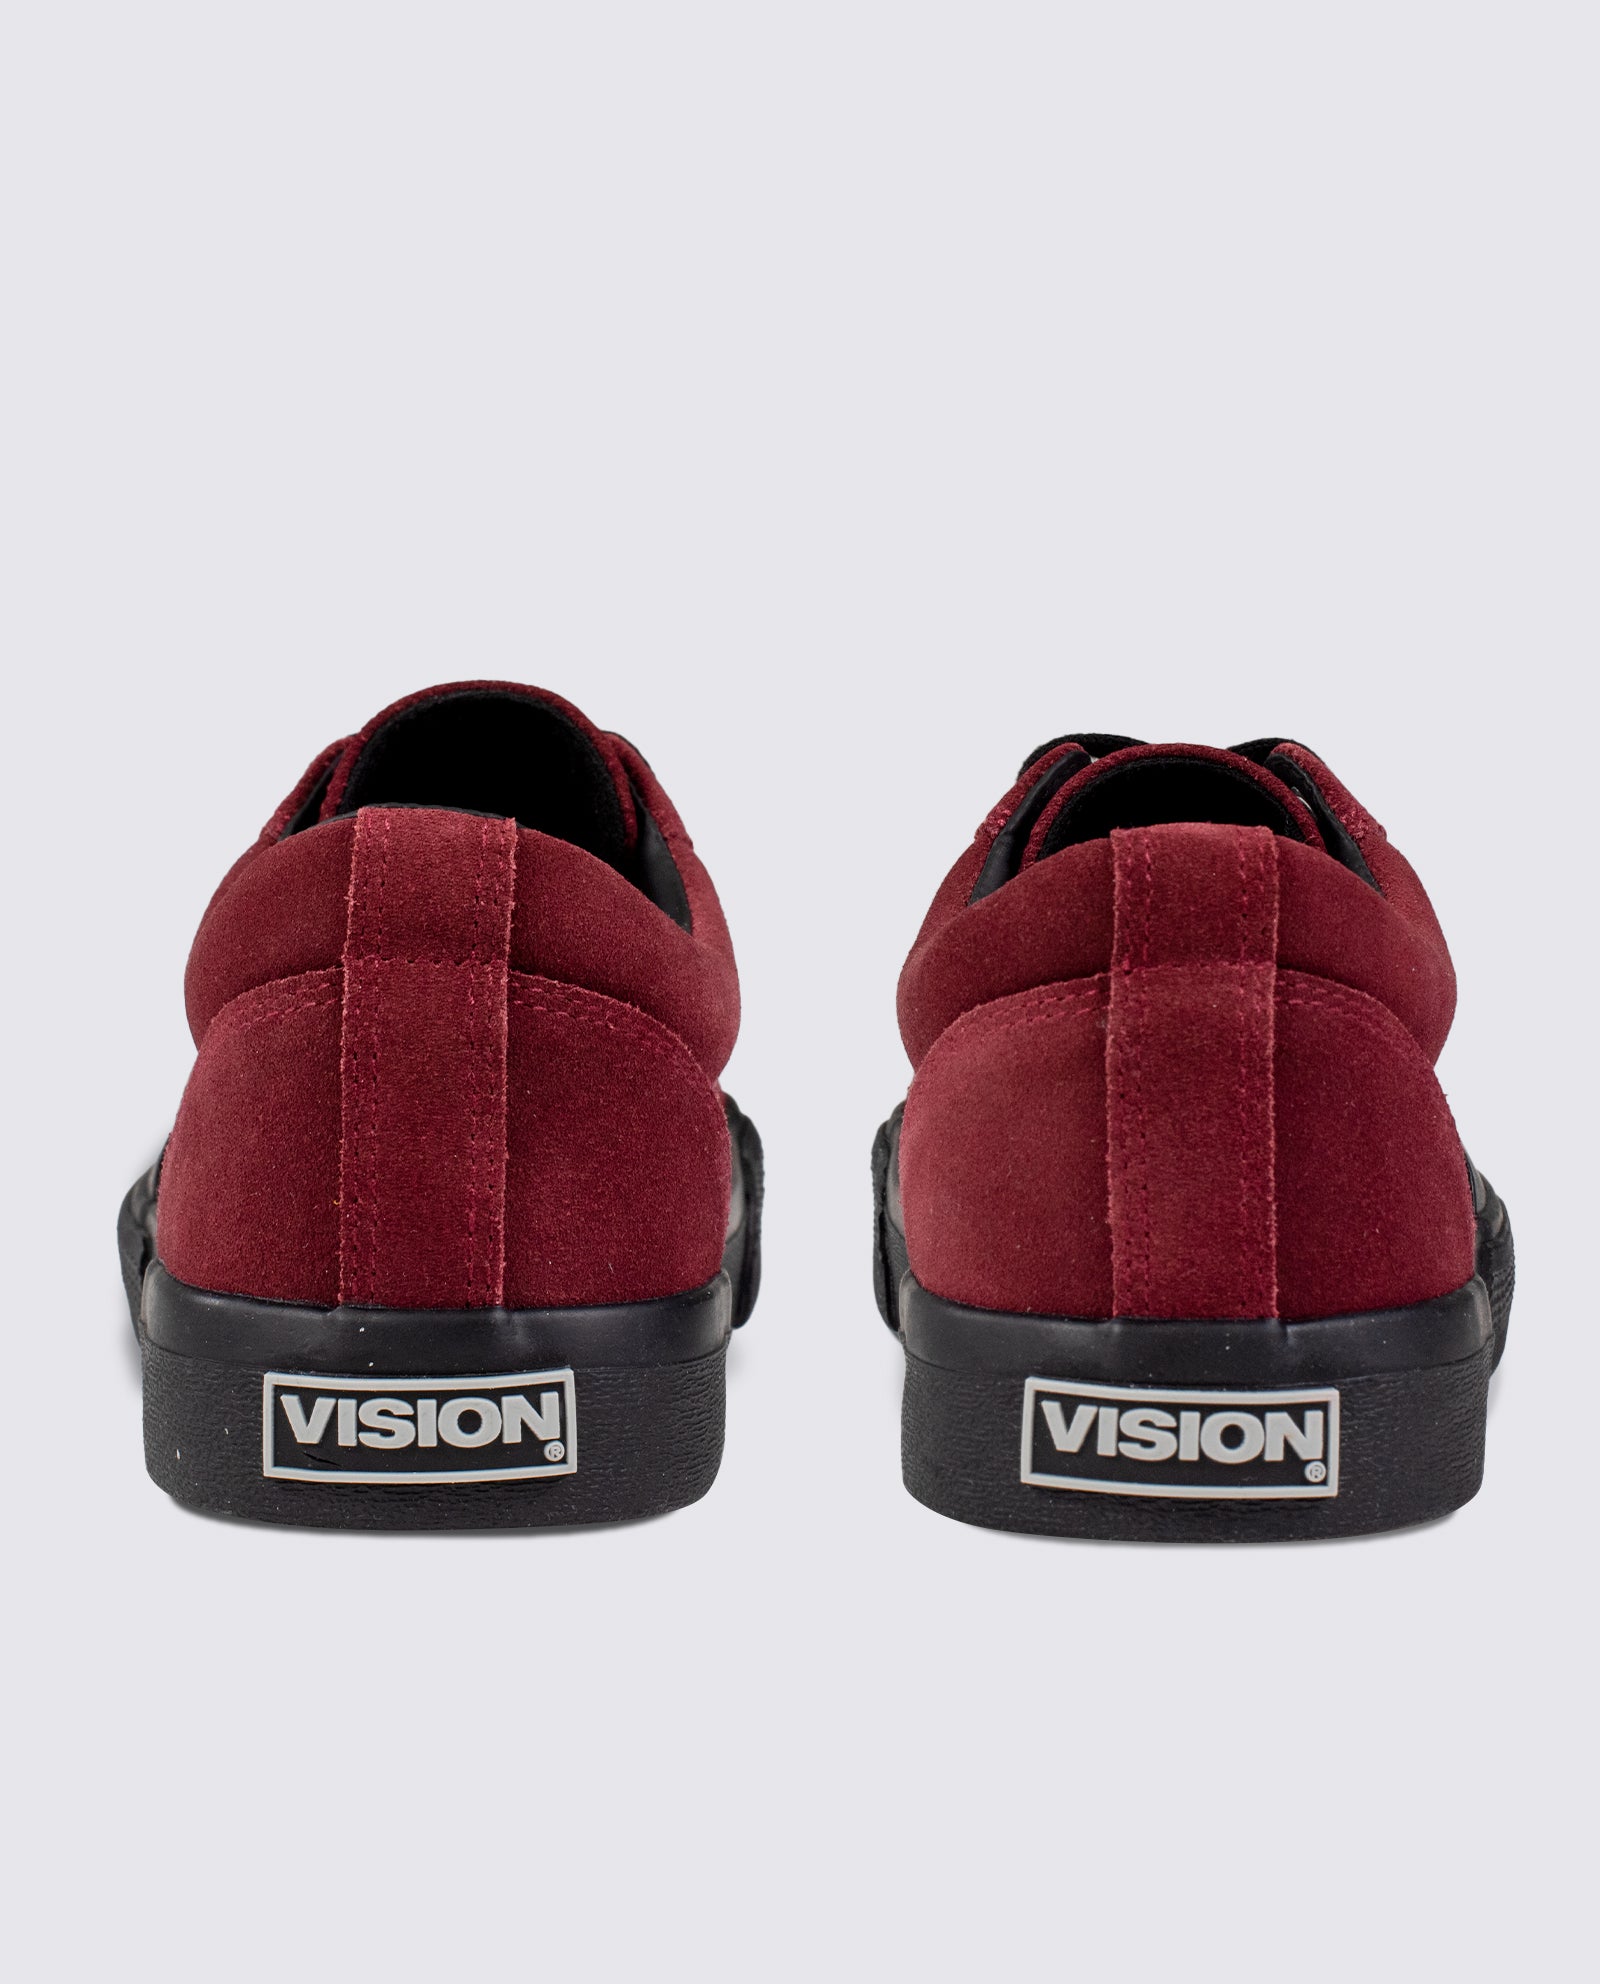 Vision Street Wear Leather Suede Low Top Skateboard Sneakers Oxblood